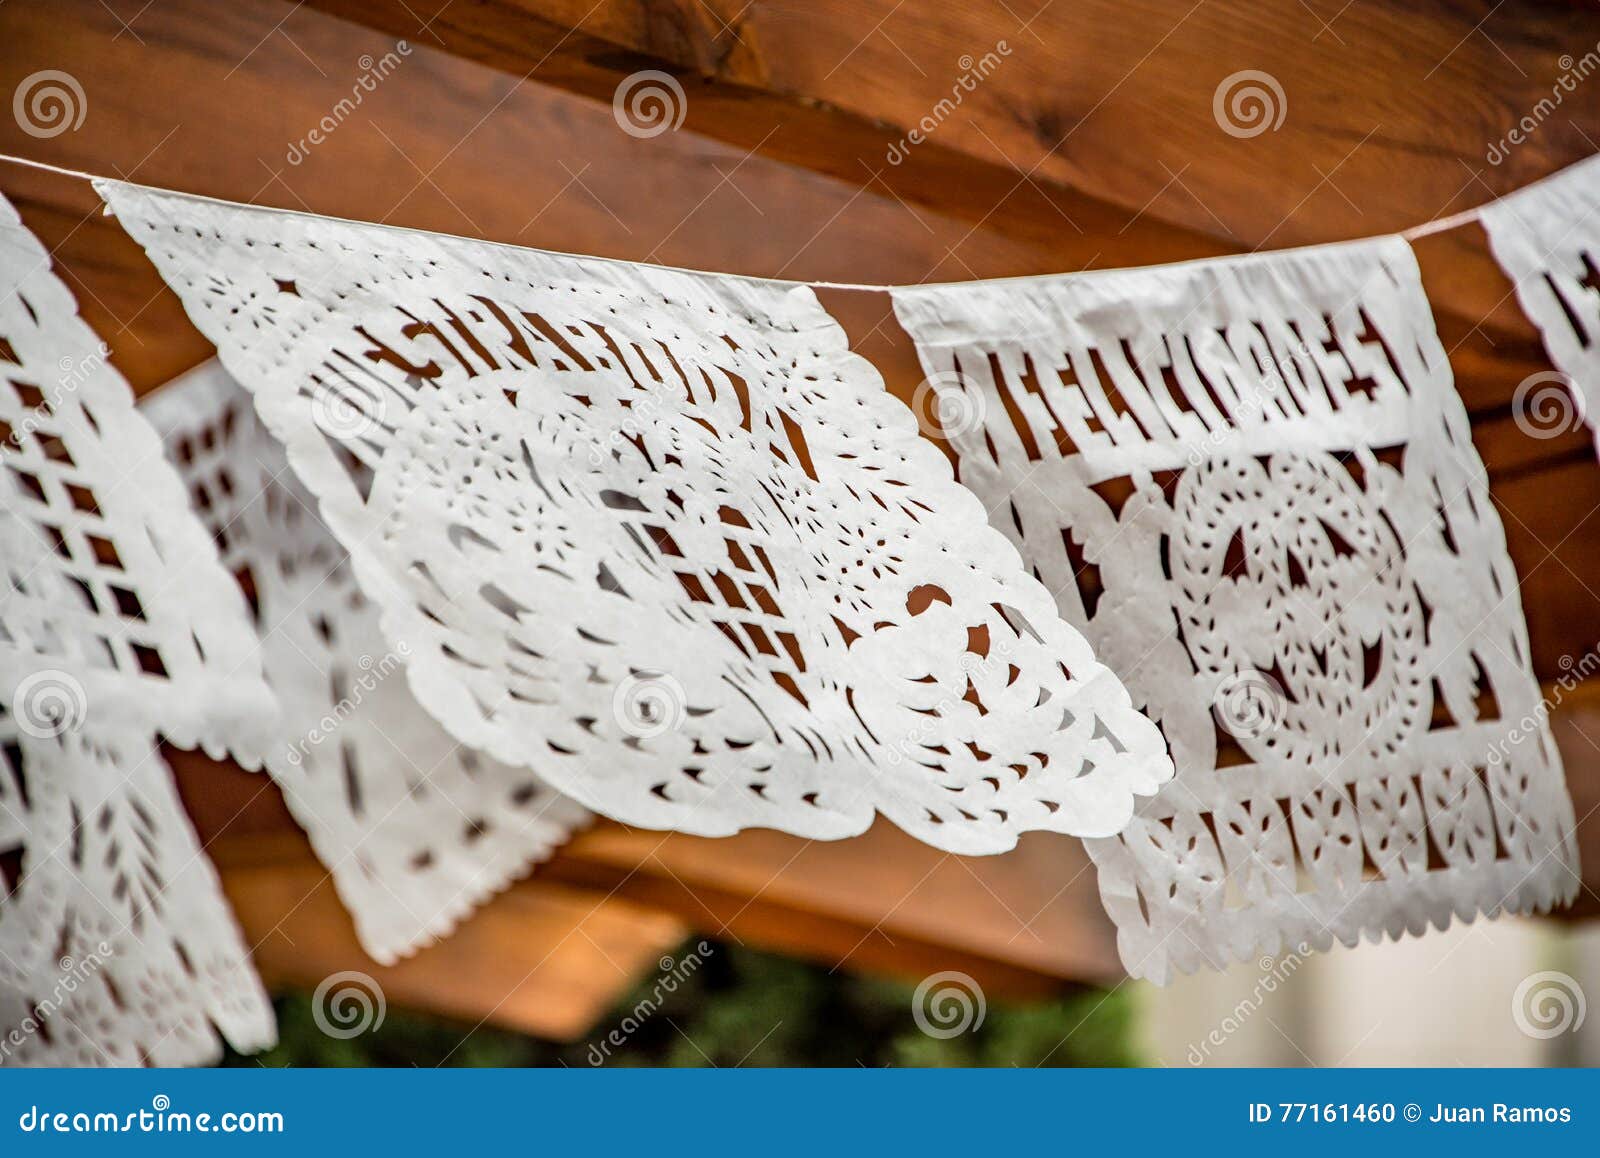 mexican cut tissue paper banner wedding decoration